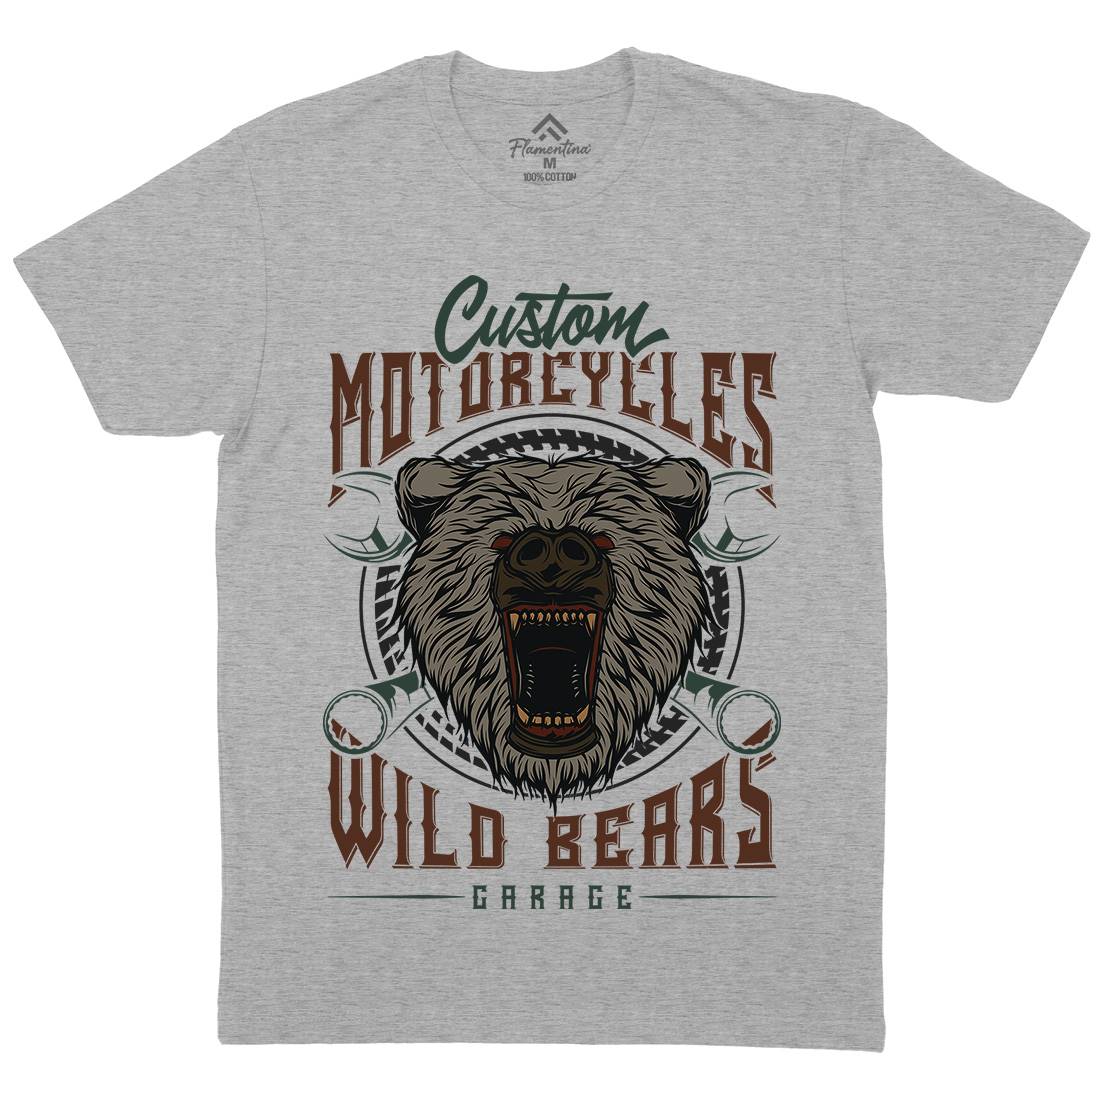 Wild Bears Mens Crew Neck T-Shirt Motorcycles B788